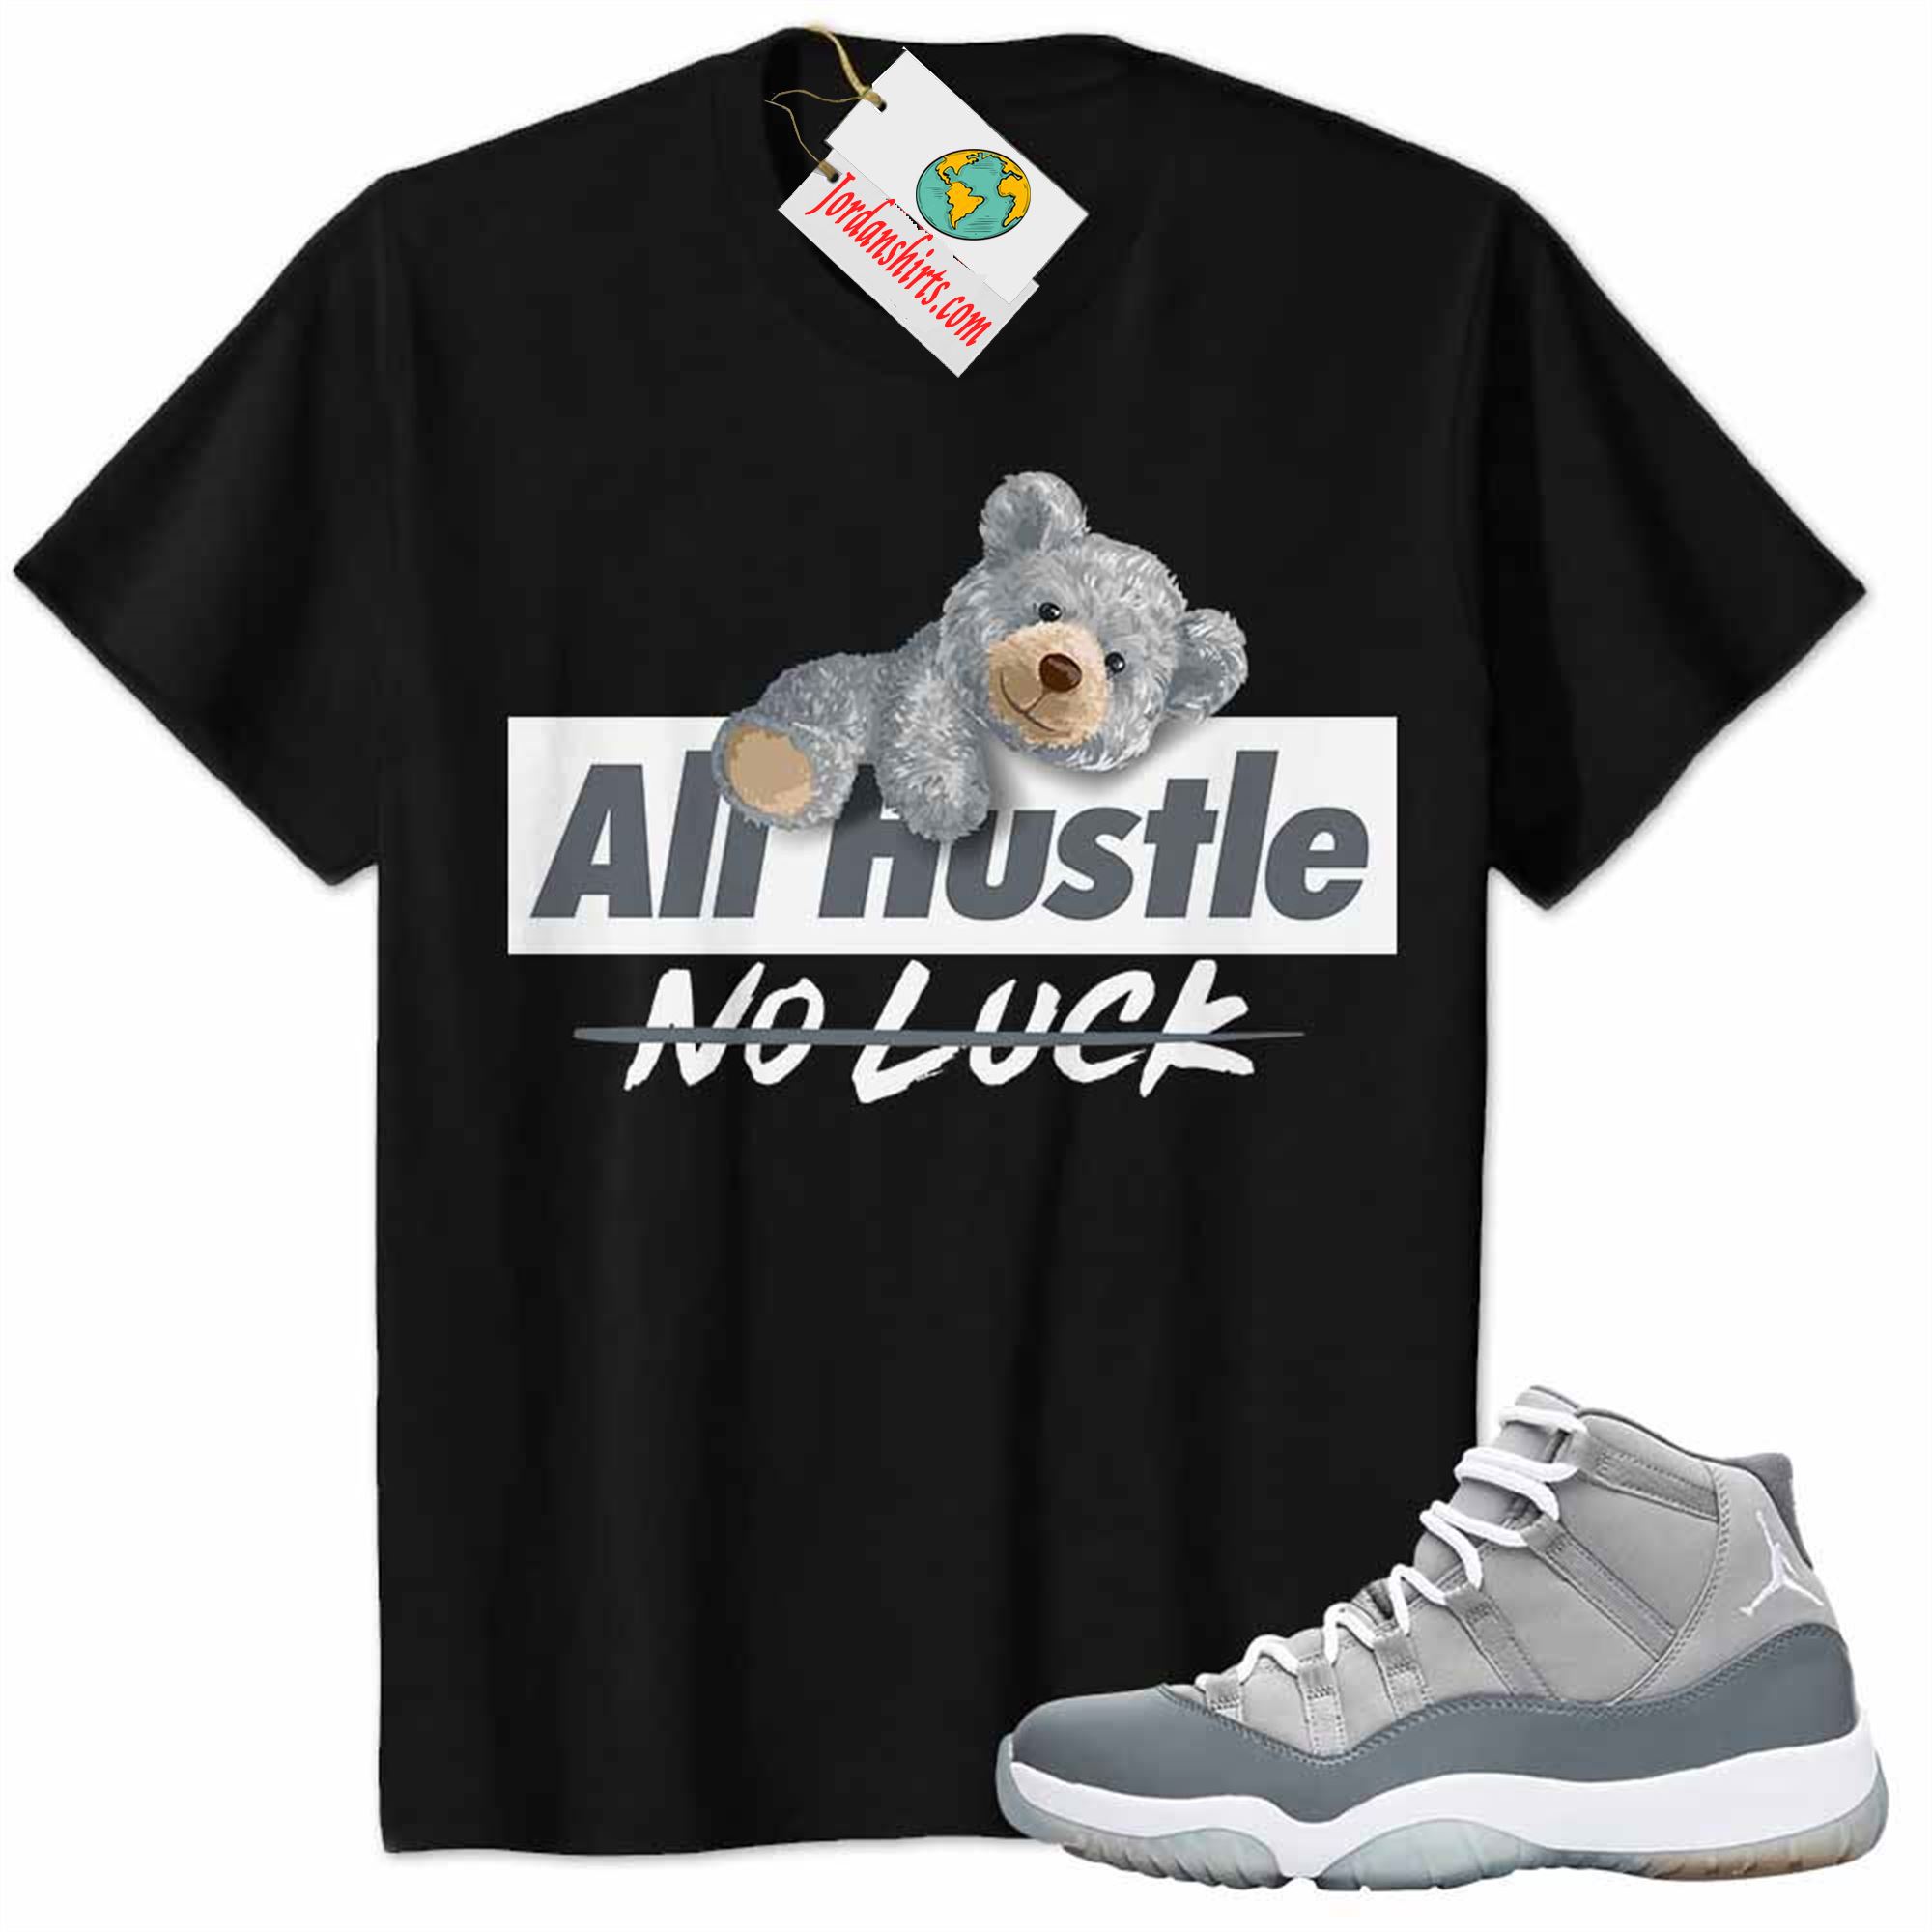 Jordan 11 Shirt, Teddy Bear Climbing All Hustle No Luck Black Air Jordan 11 Cool Grey 11s Size Up To 5xl